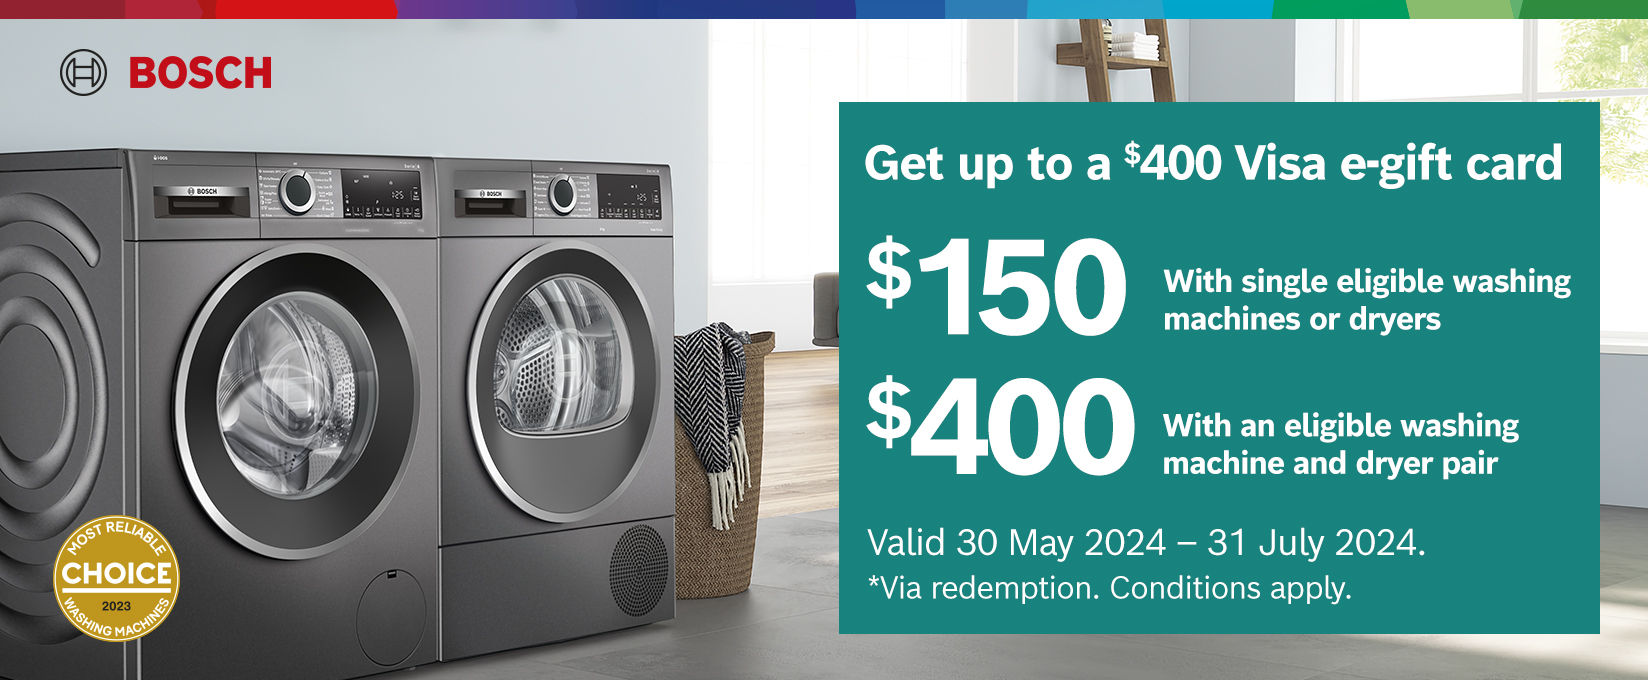 Bonus Visa e-Gift Card Up To $400 On Selected Bosch Laundry Appliances at Elite Appliances